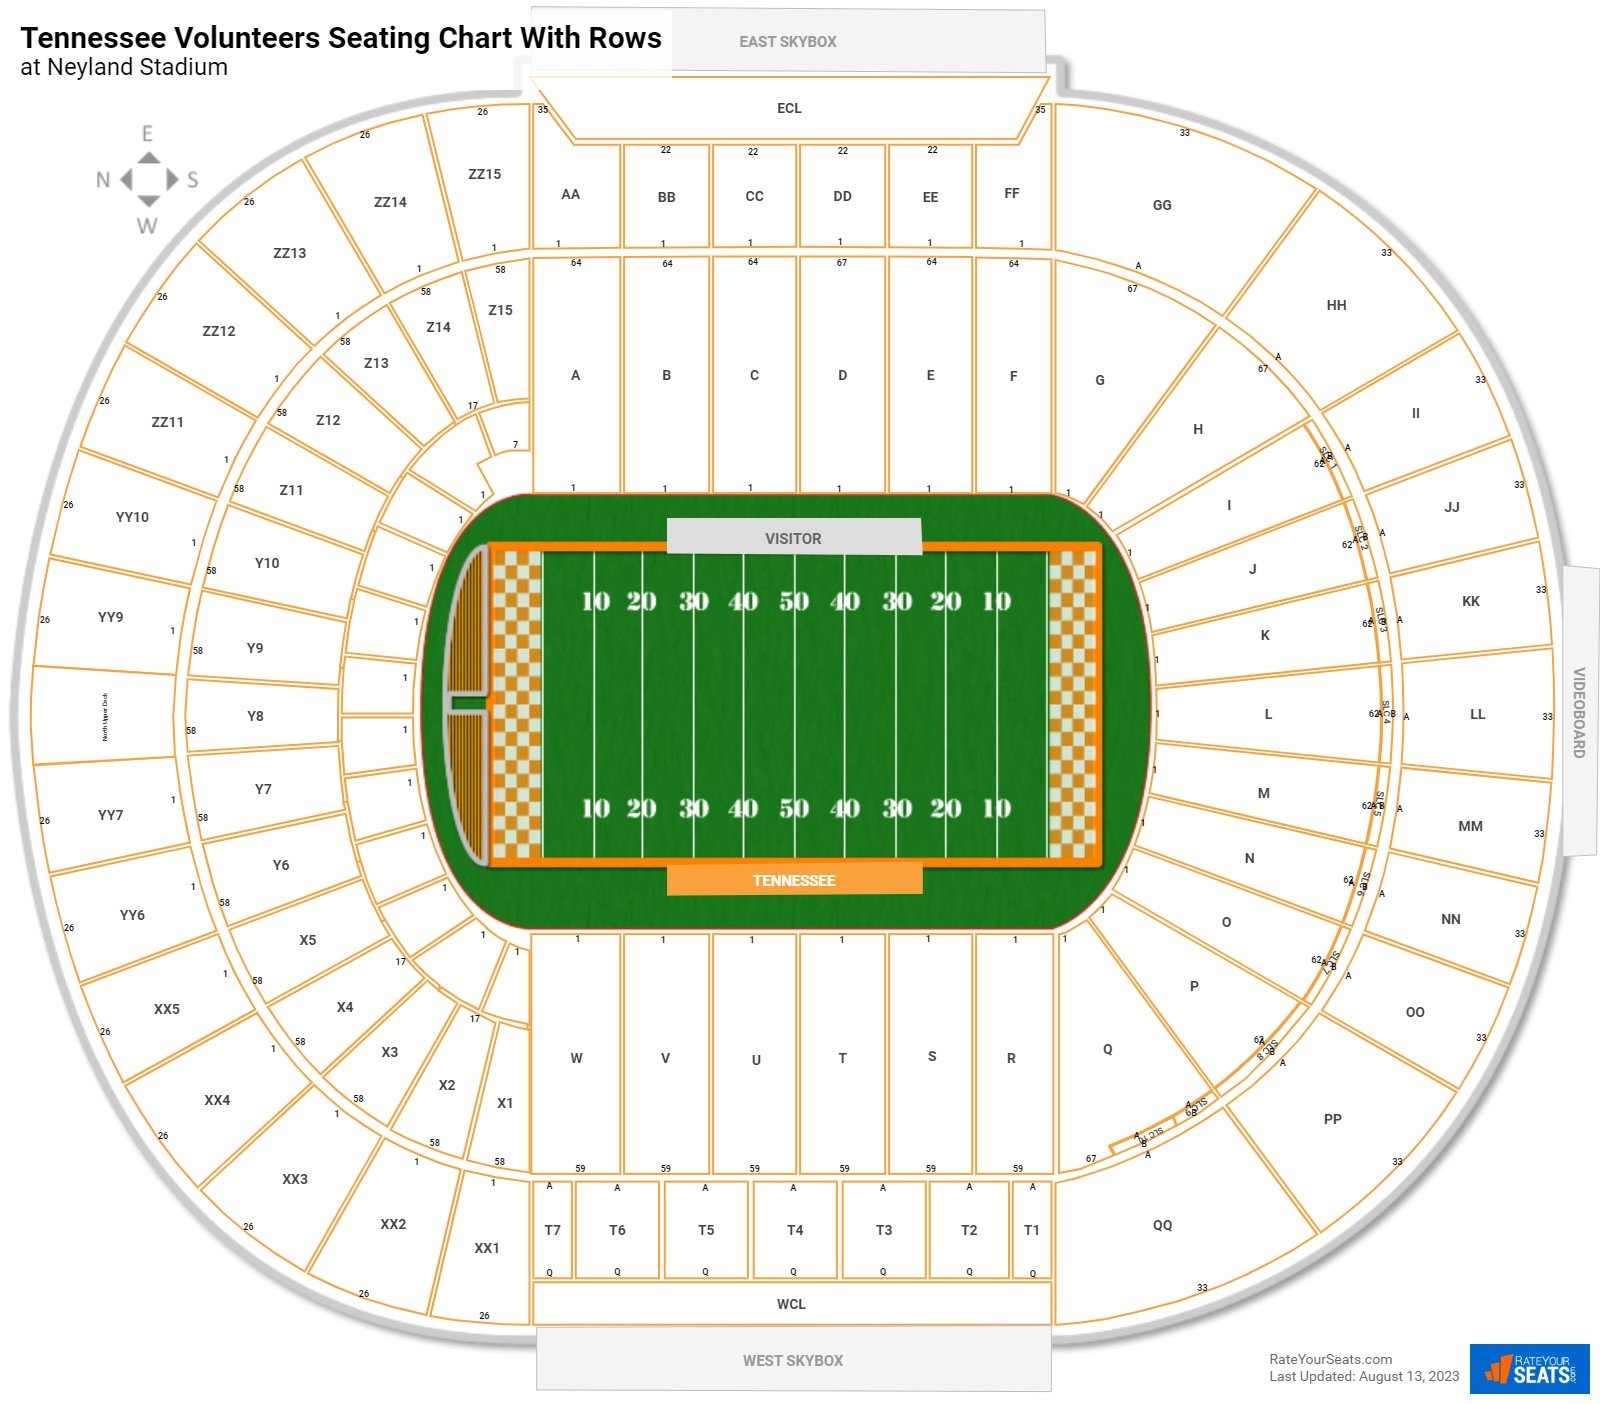 Neyland Stadium seating chart with row numbers